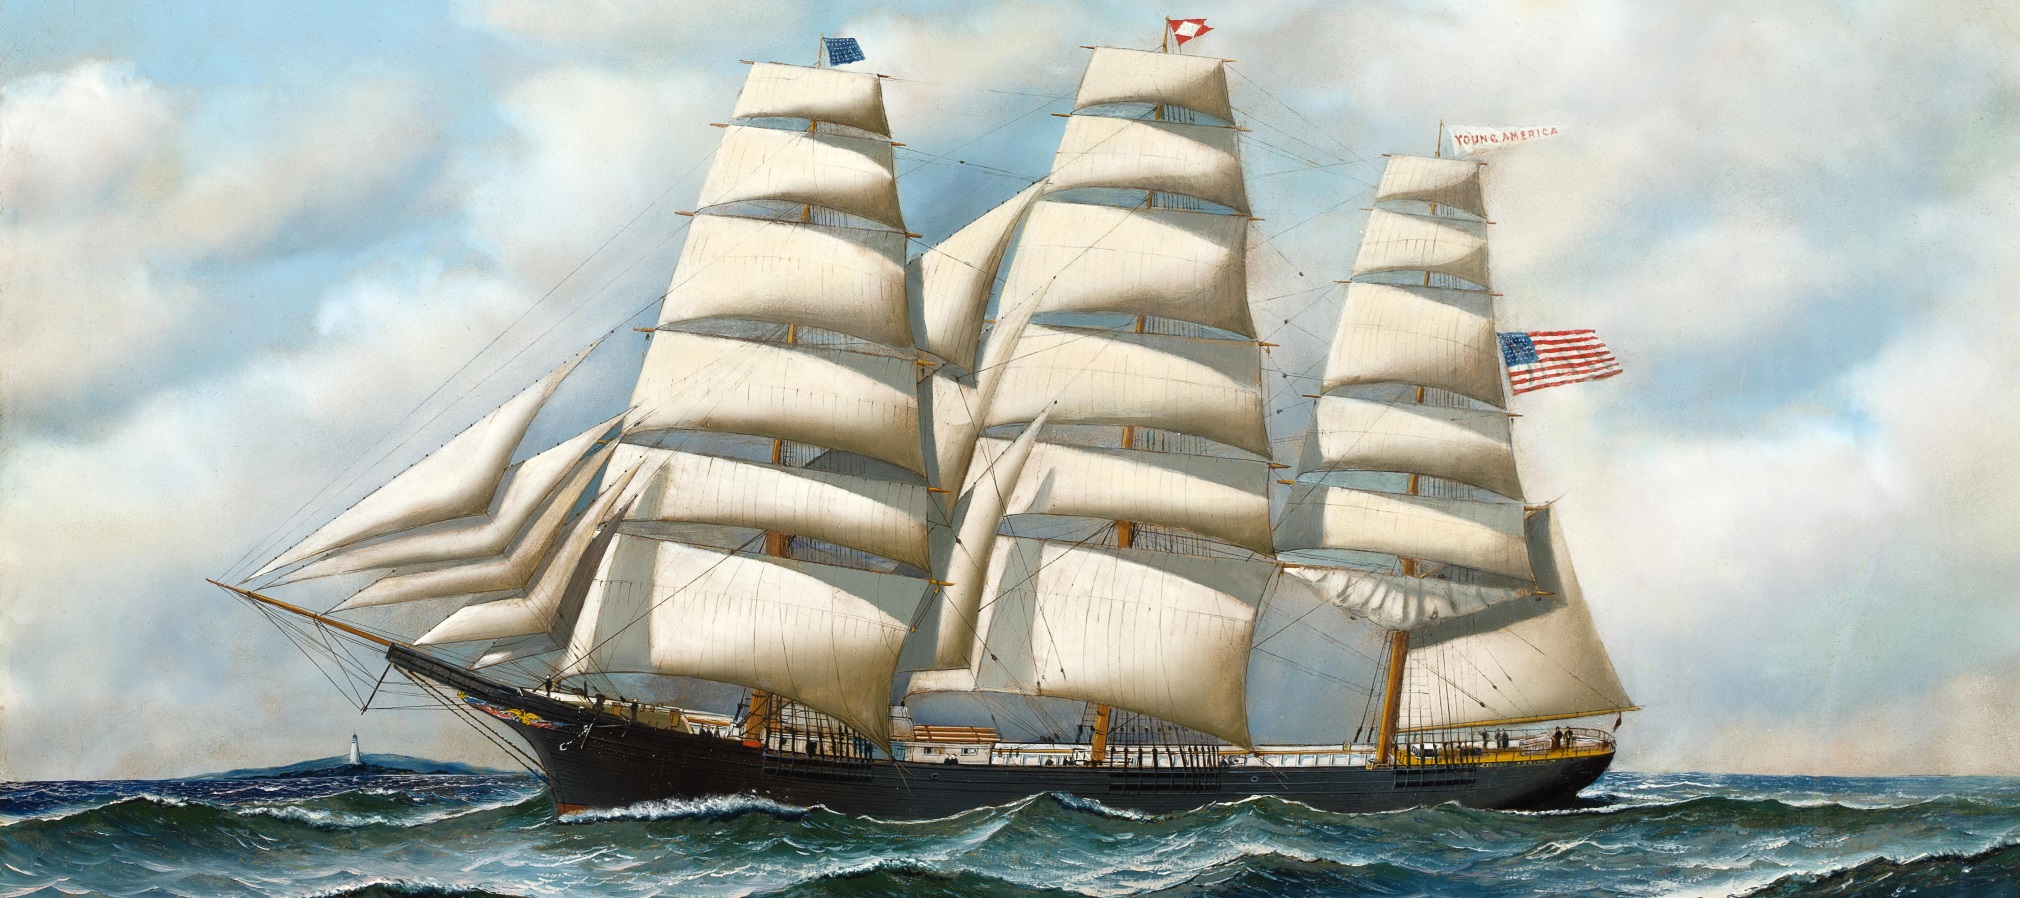 Antonio Jacobsen, The Ship Young America at Sea, 1915